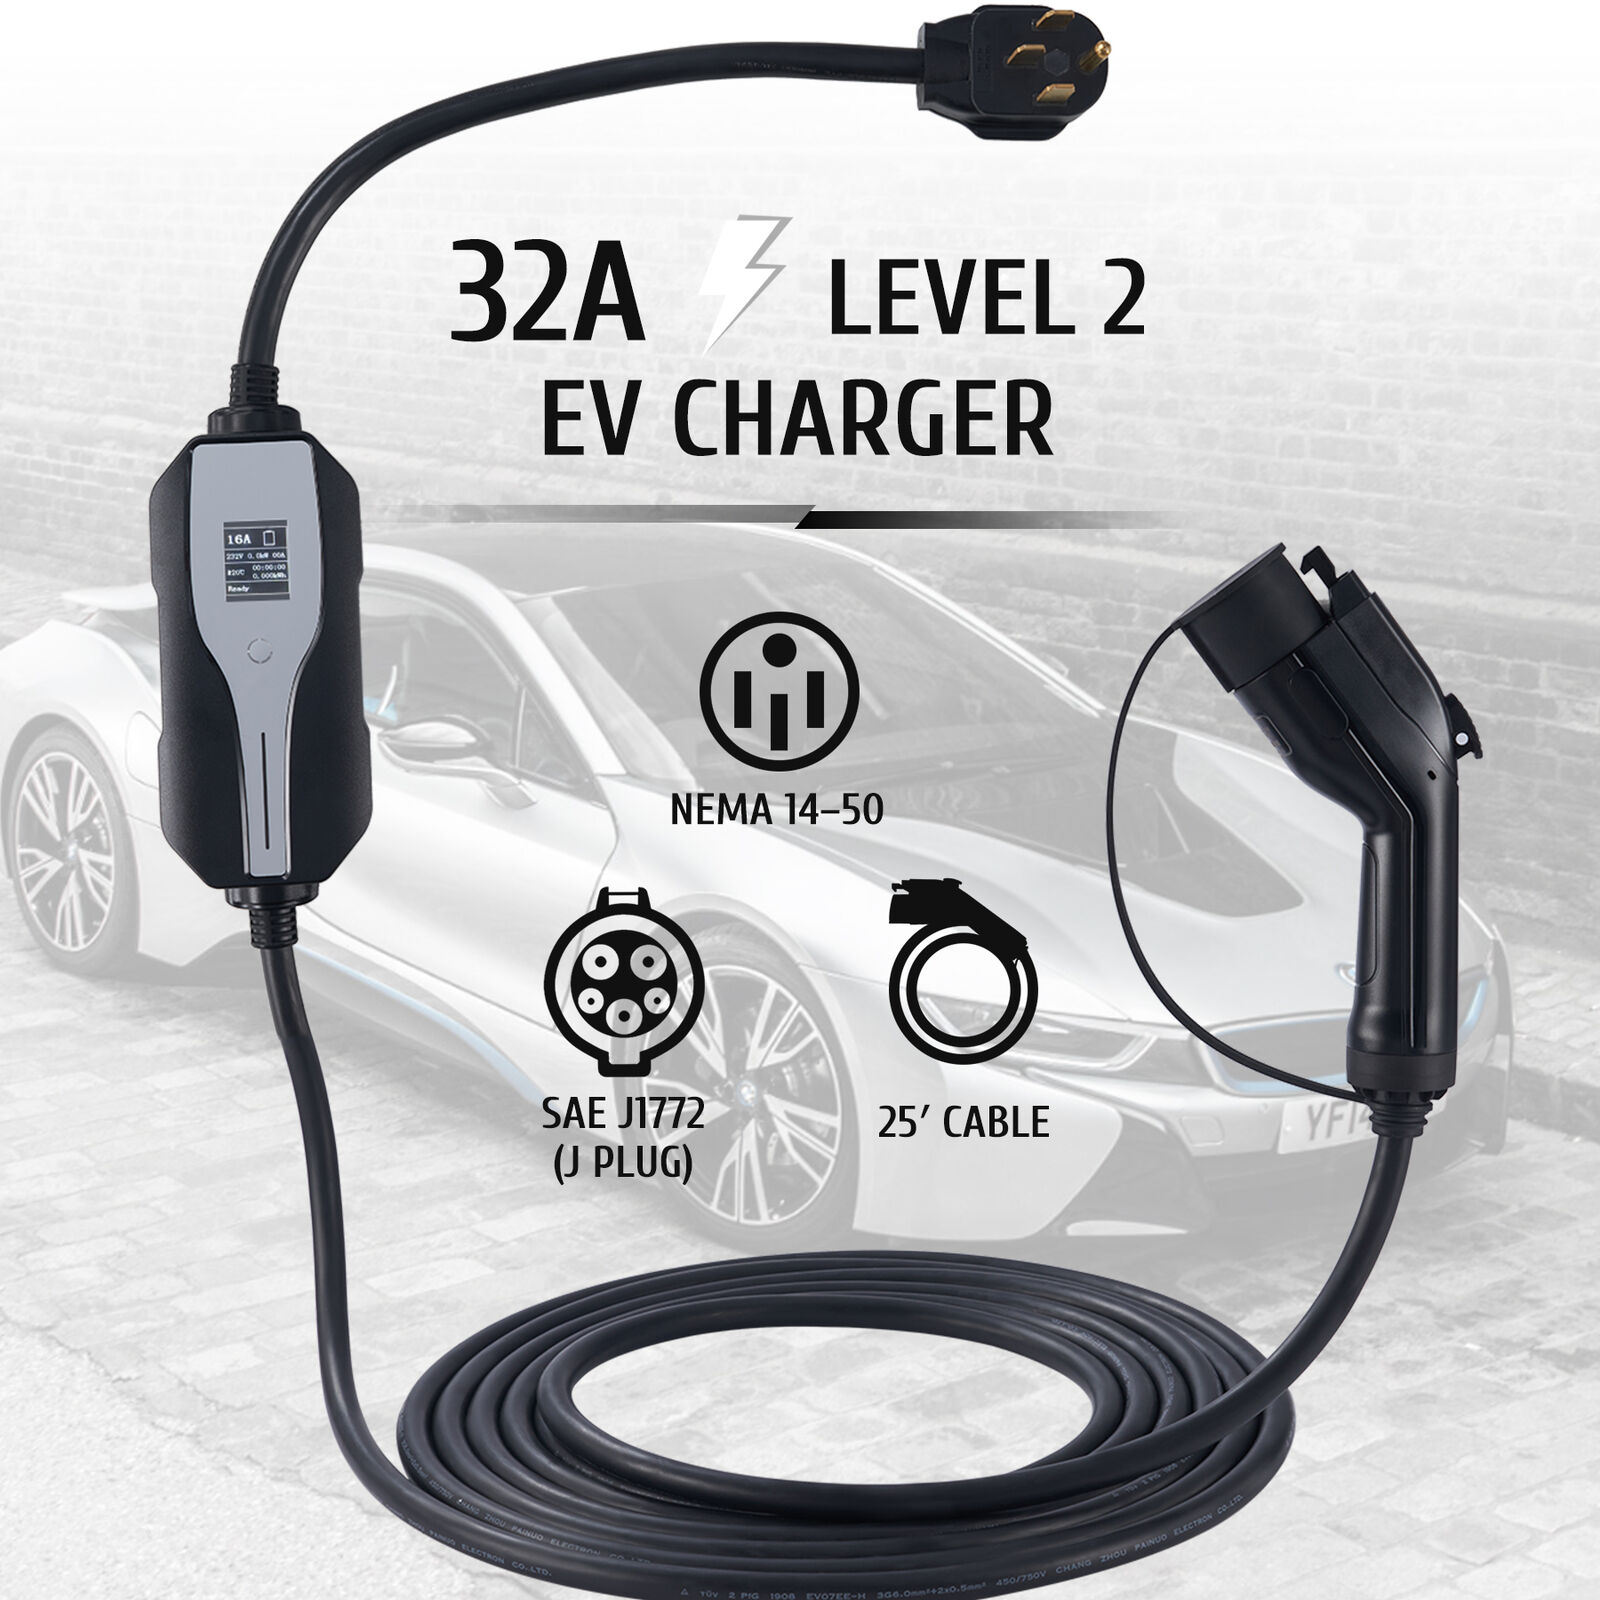 32A 240V Max Level 2 EV Charger for SAE J1772 Electric Cars & NEMA 14-50 Plugs